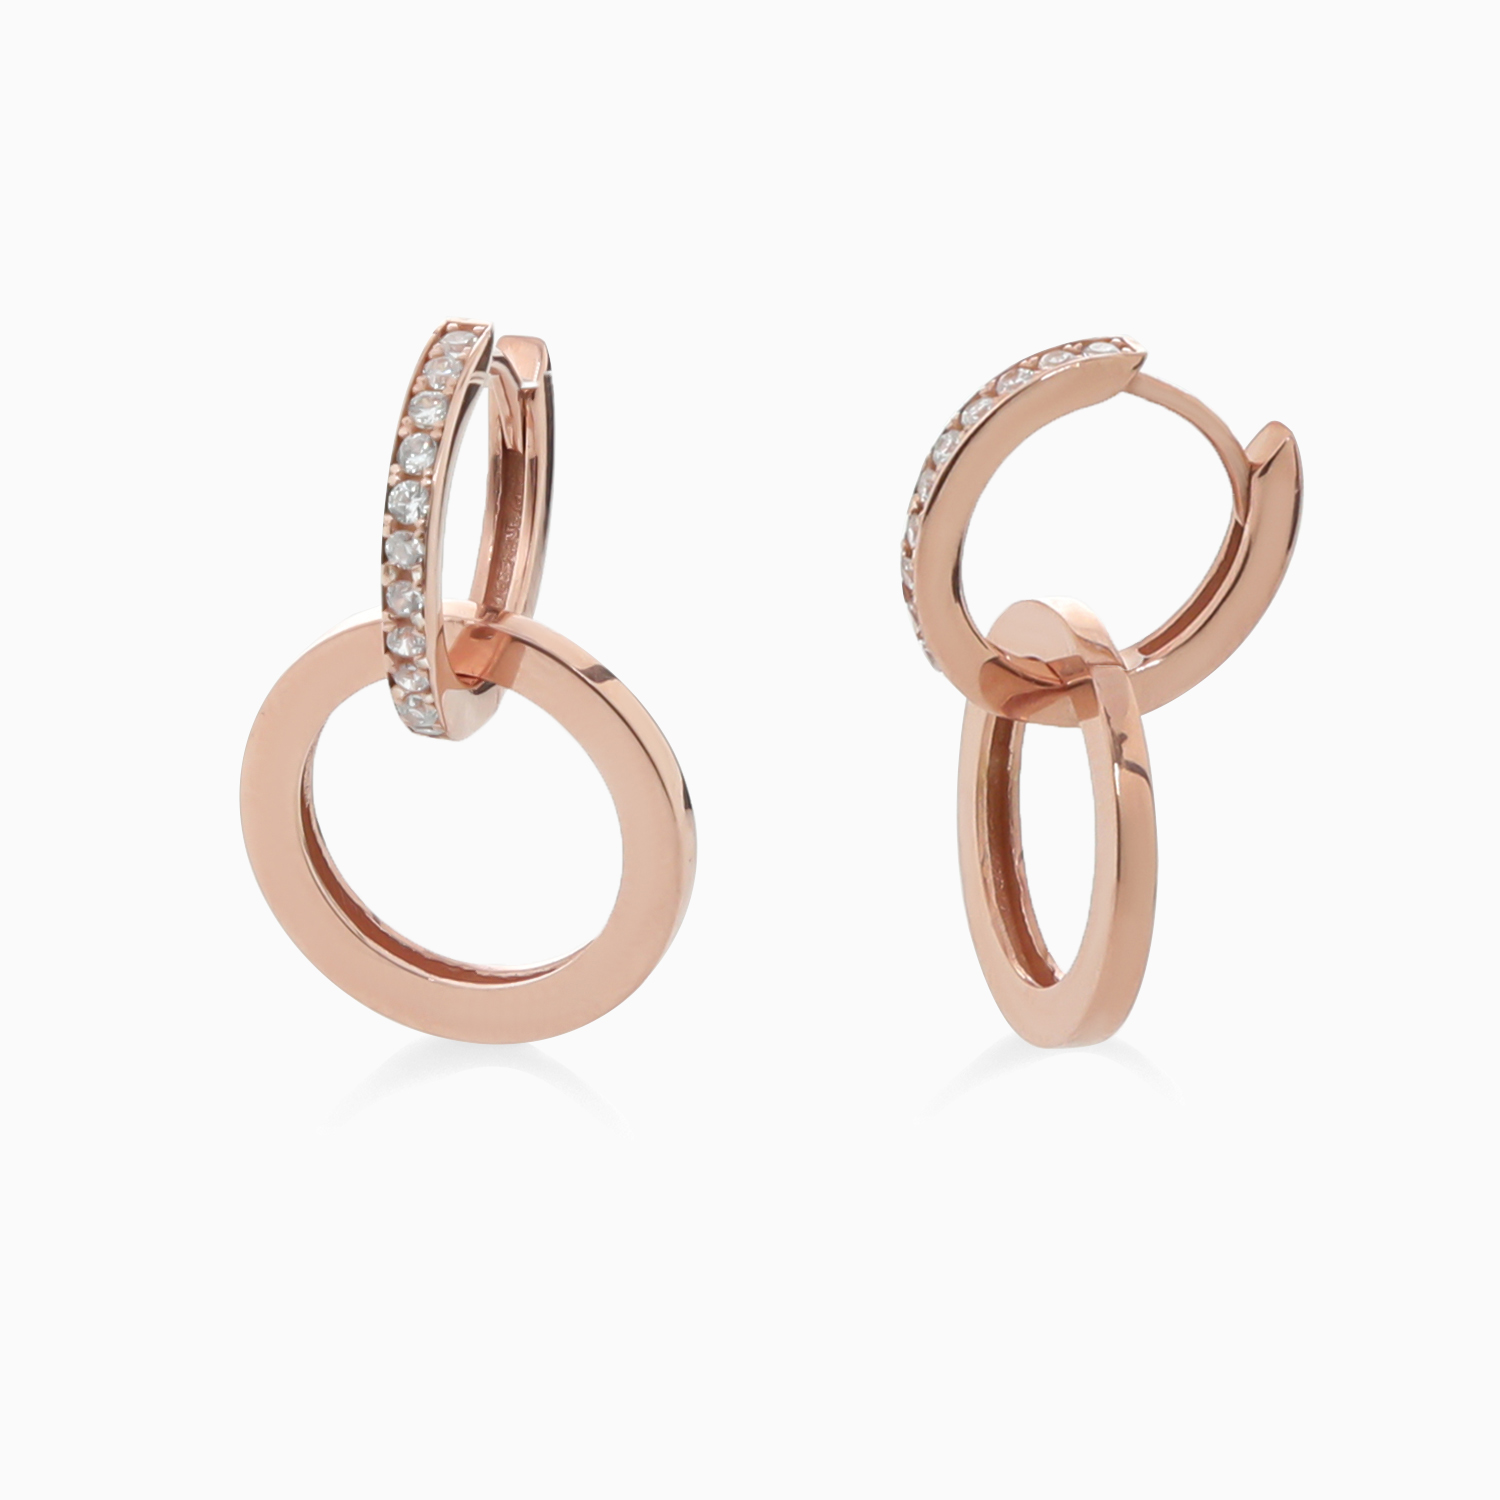 FOLLI FOLLIE – Γυναικεία ασημένια κρεμαστά σκουλαρίκια FOLLI FOLLIE Interlinking ροζ χρυσό